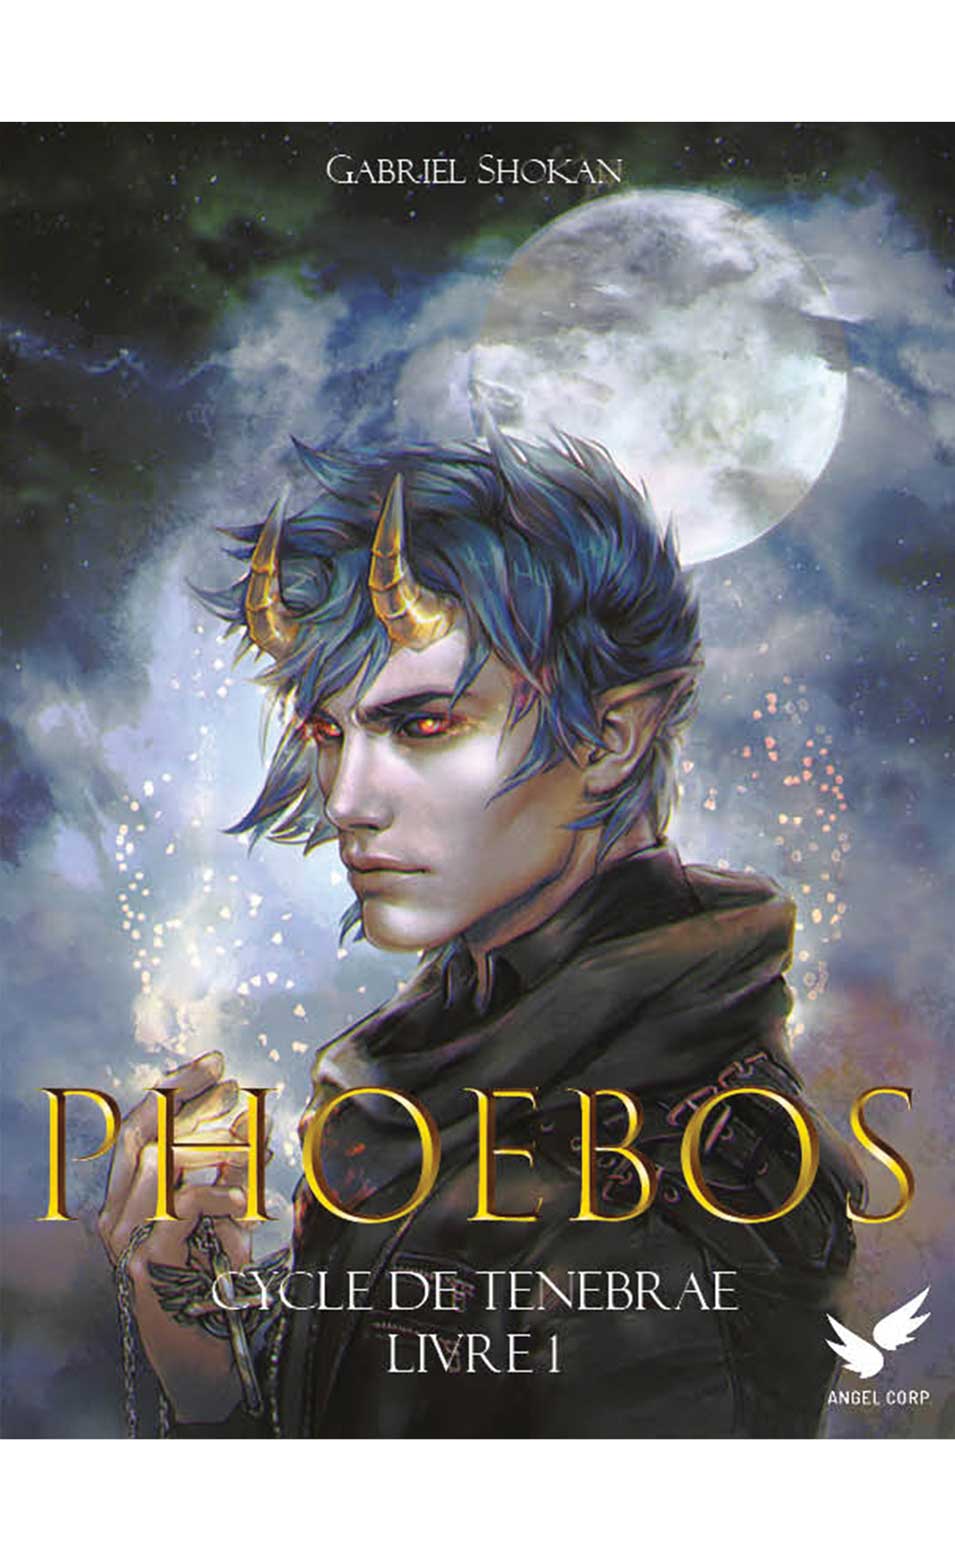 Couverture de Phoebos, le premier roman de darkfantasy du cycle de Tenebrae écrit par Gabriel Shokan 